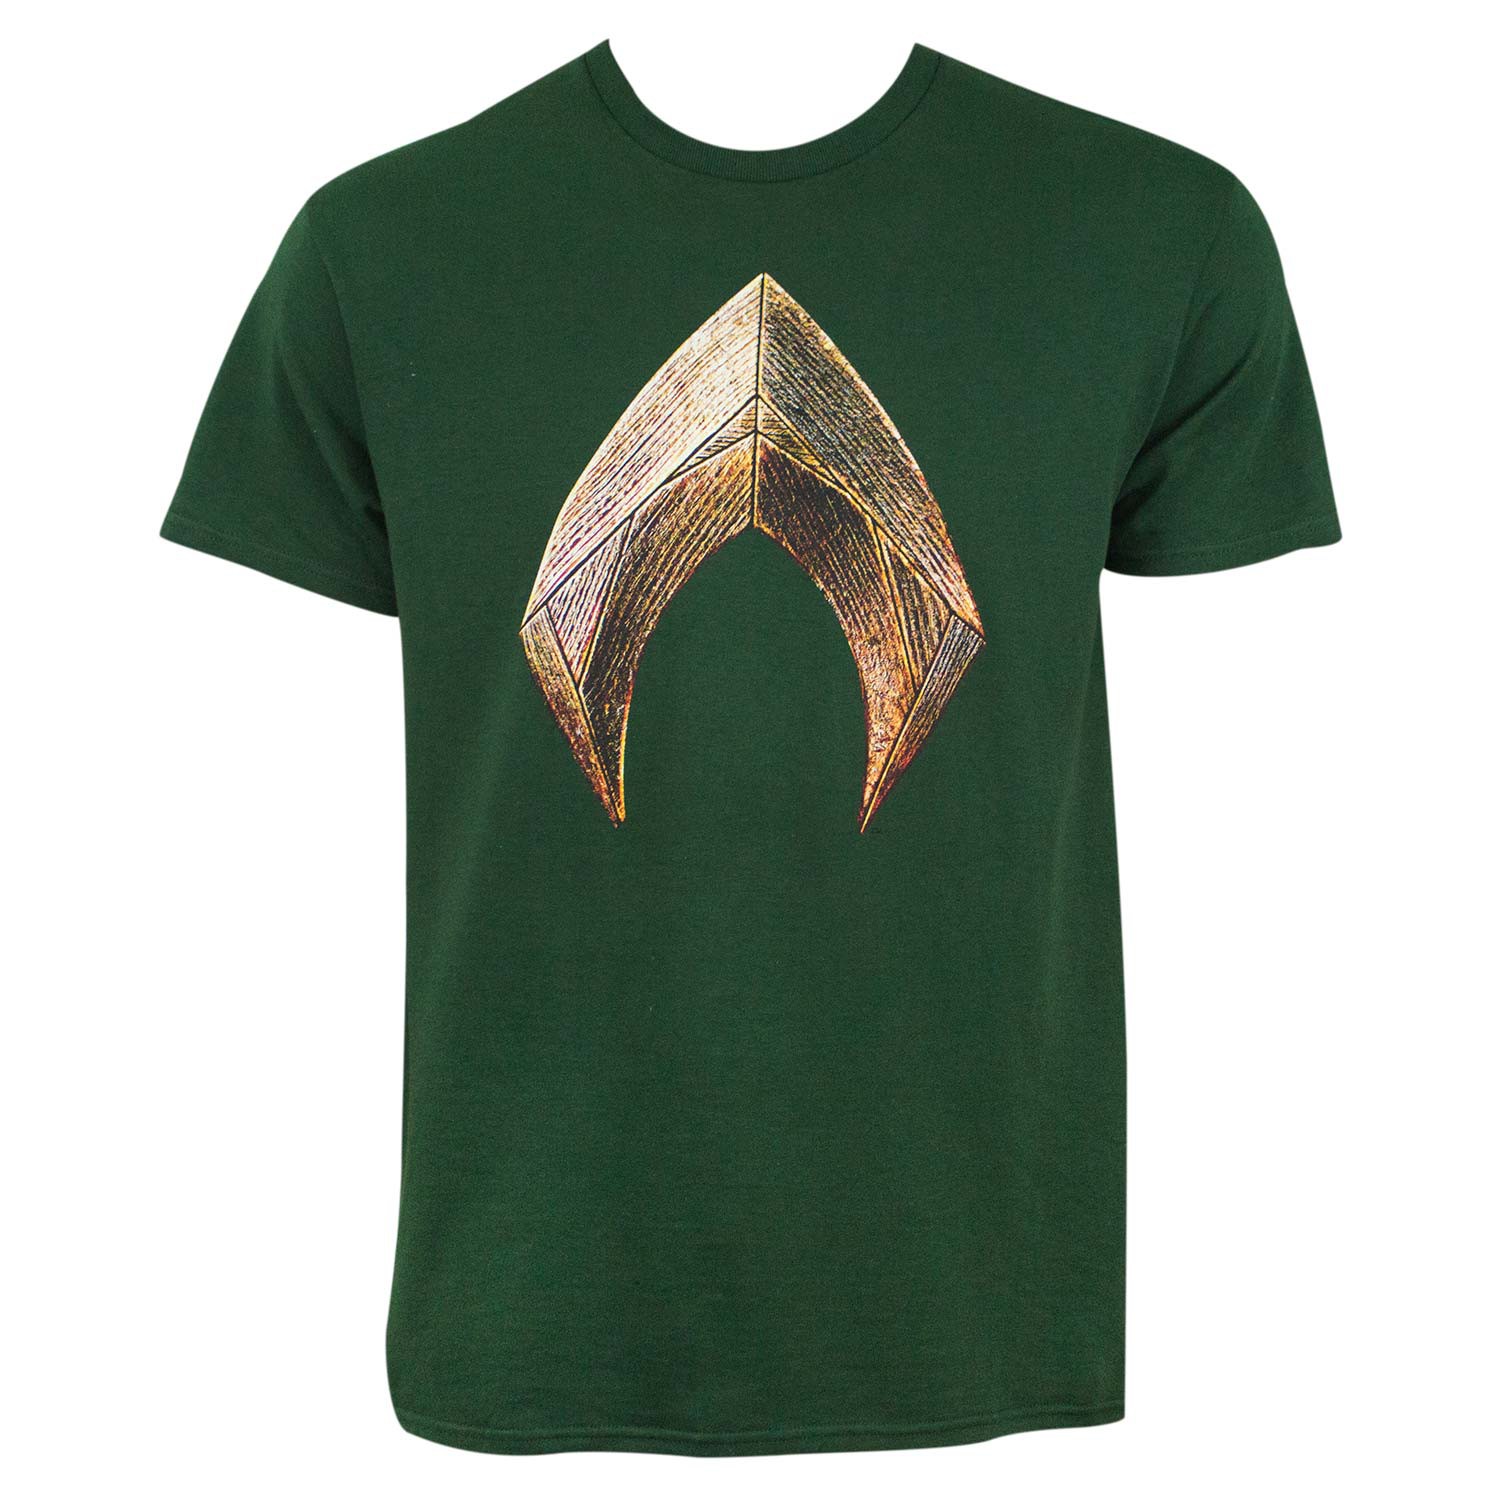 Justice League Aquaman Green Tee Shirt